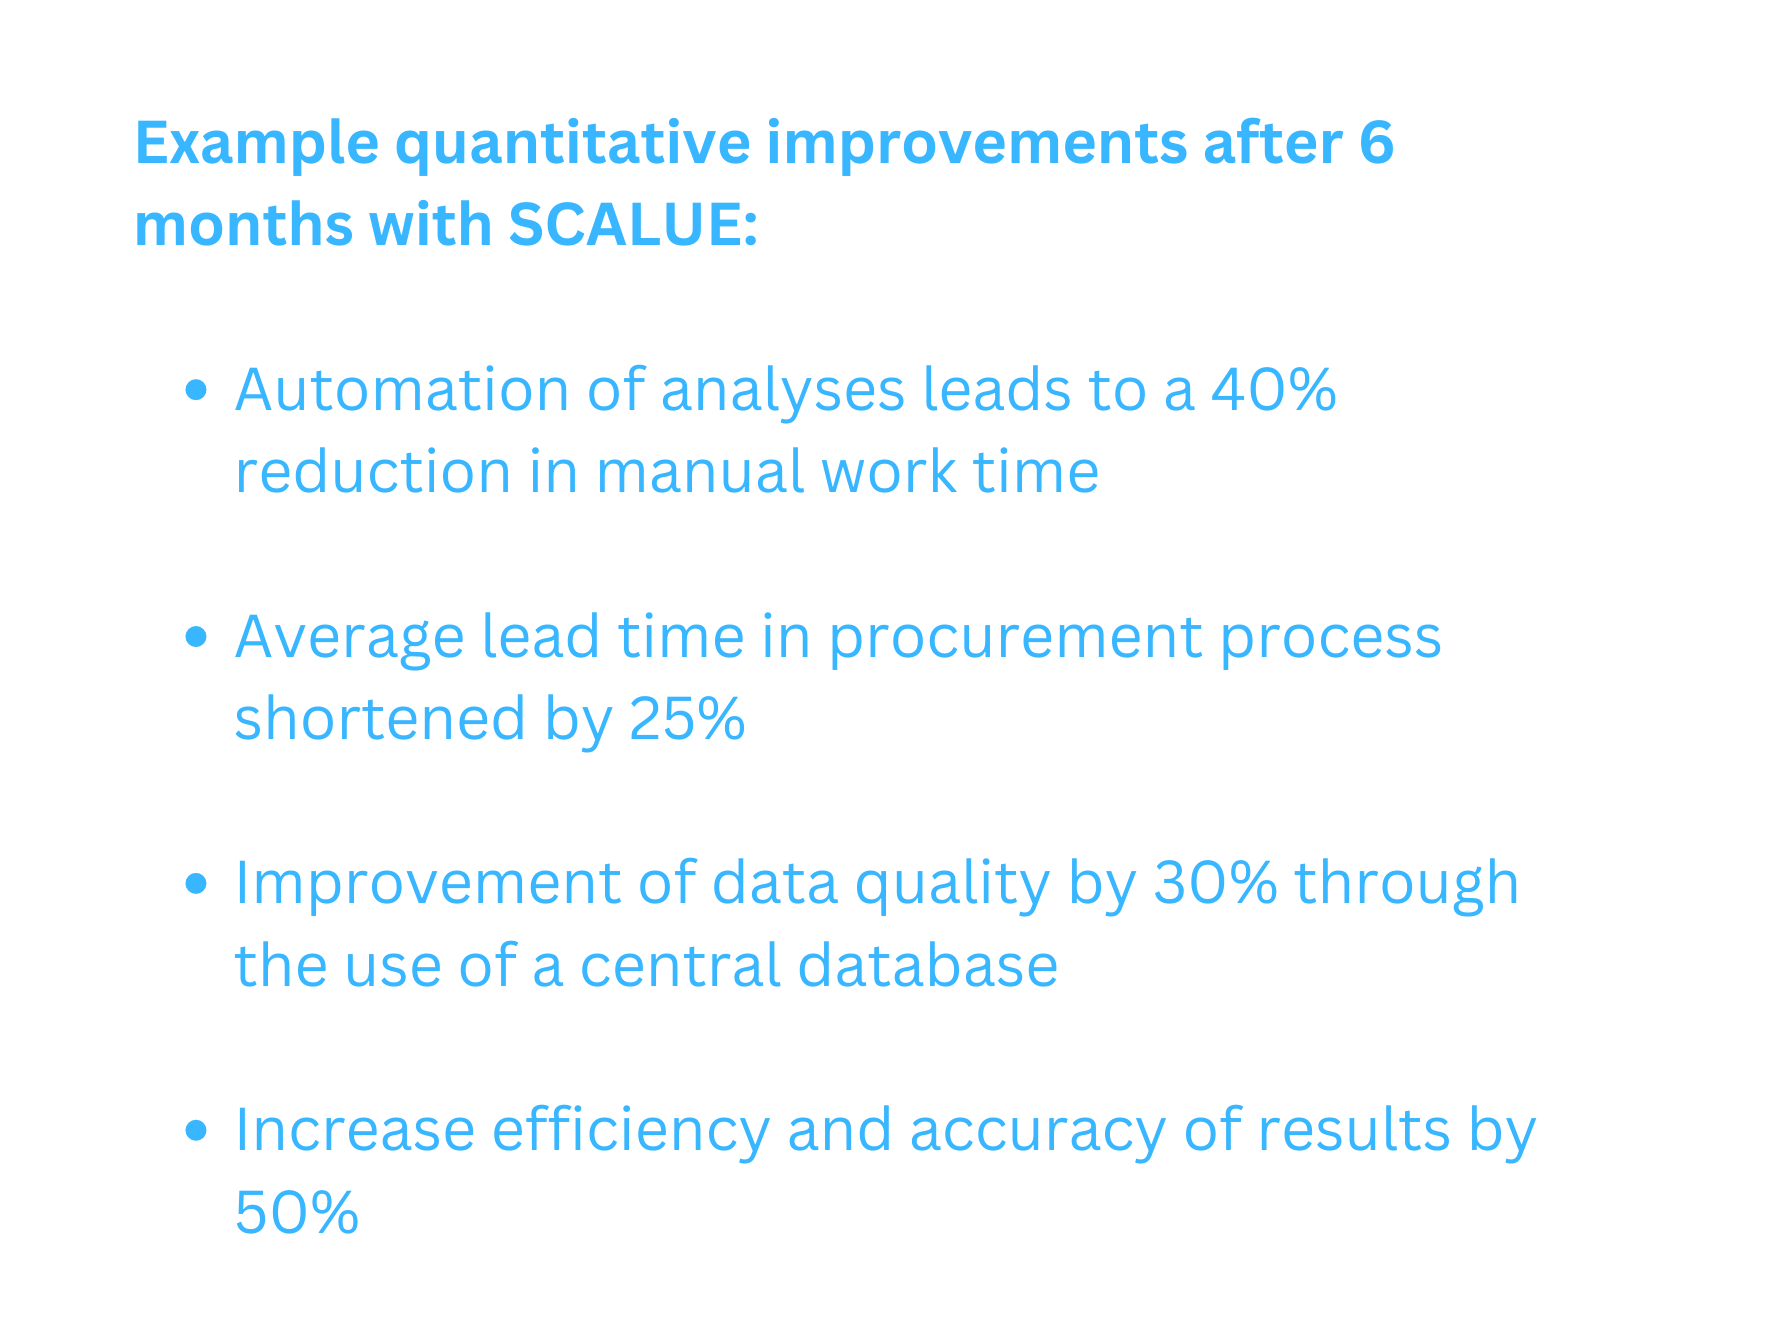 Quantitive Improvements with SCALUE